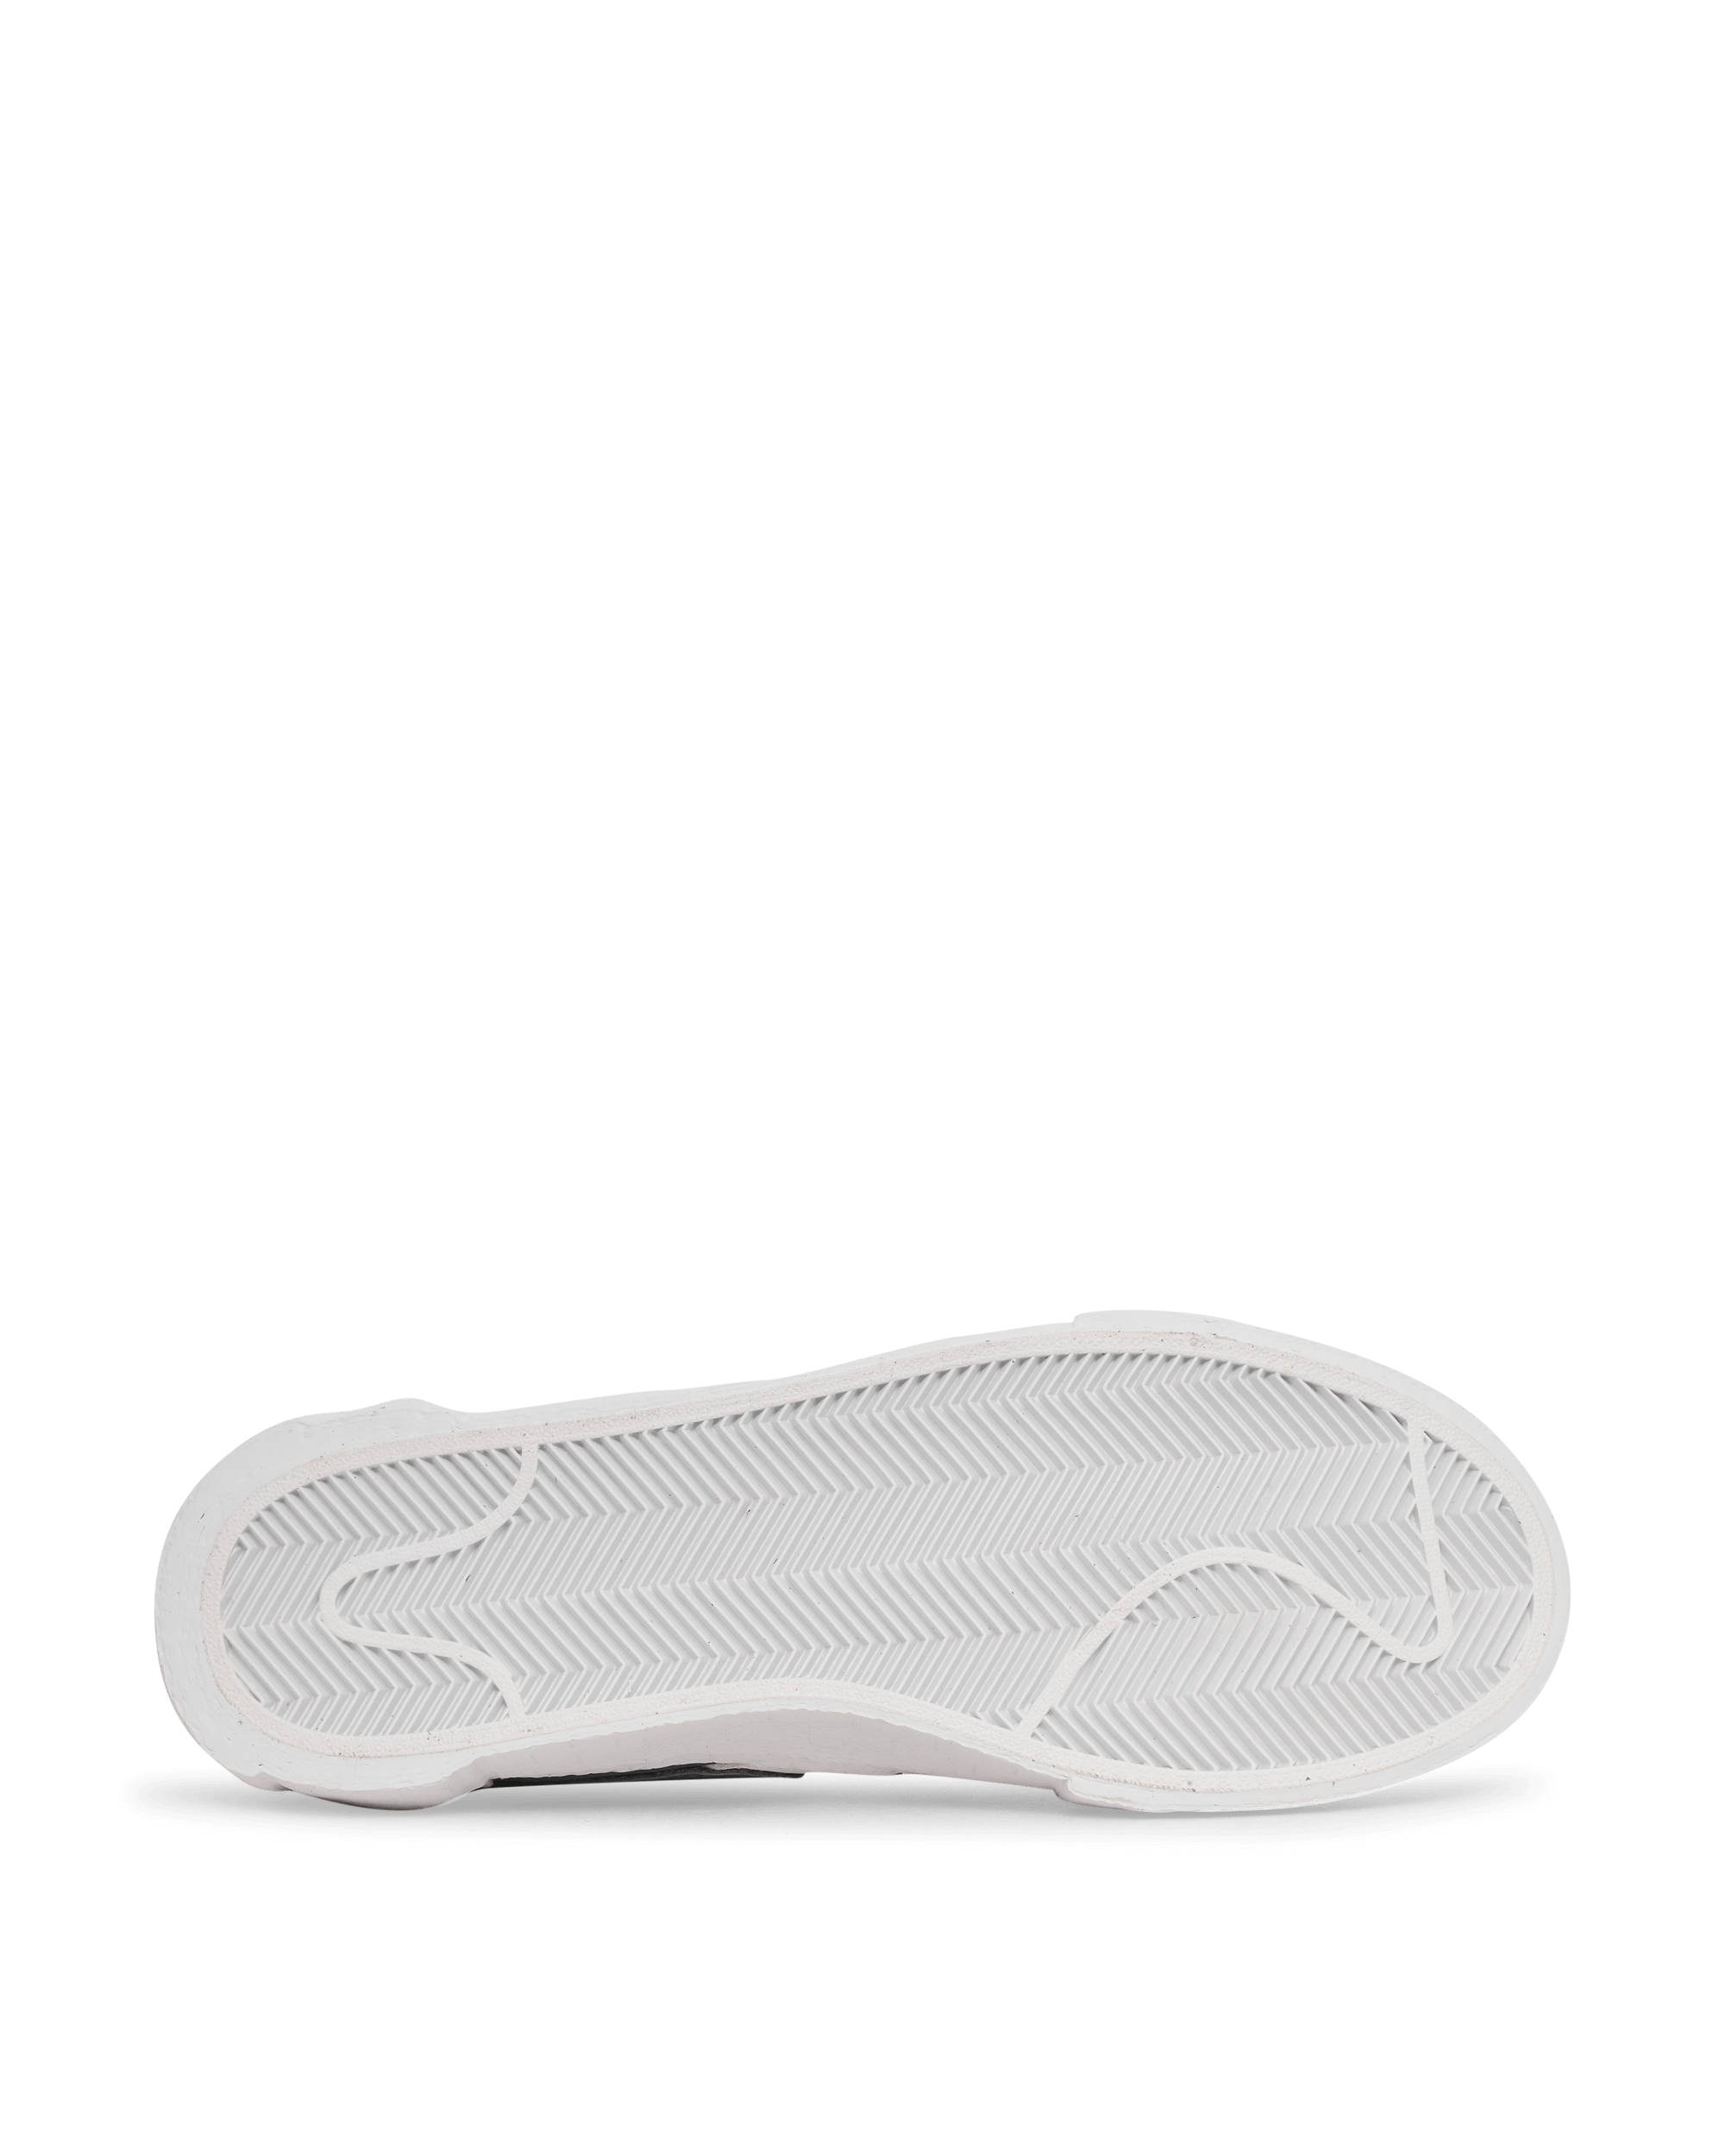 Nike Special Project Blazer Low / Sacai Iron Grey/White Sneakers Low DD1877-002